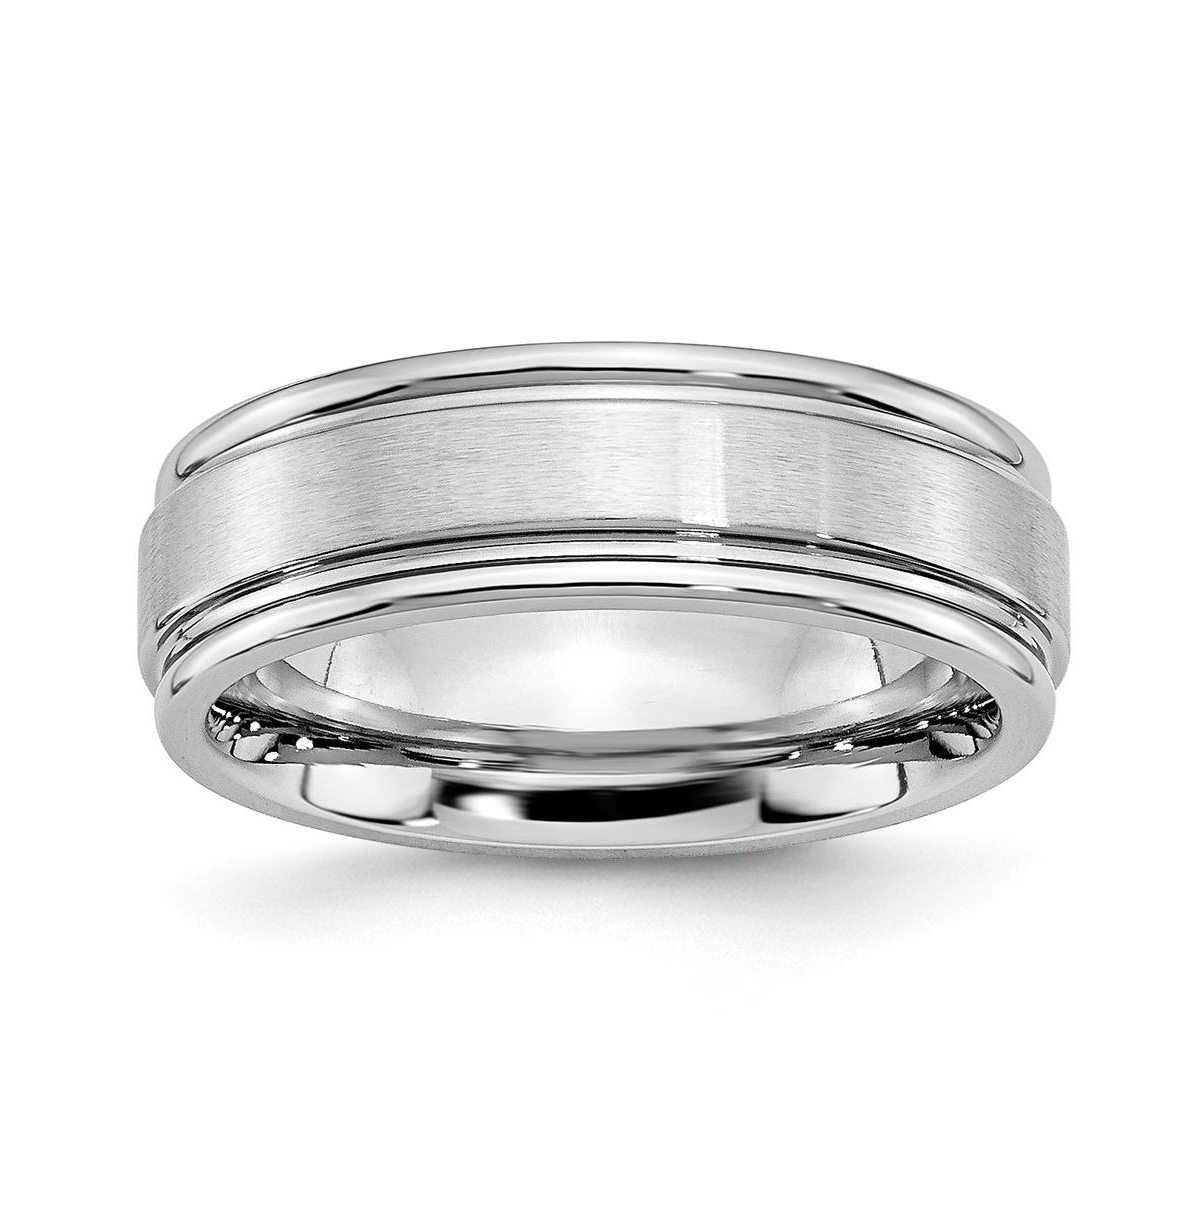 Cobalt Satin and Polished Ridged Edge Wedding Band Ring - White